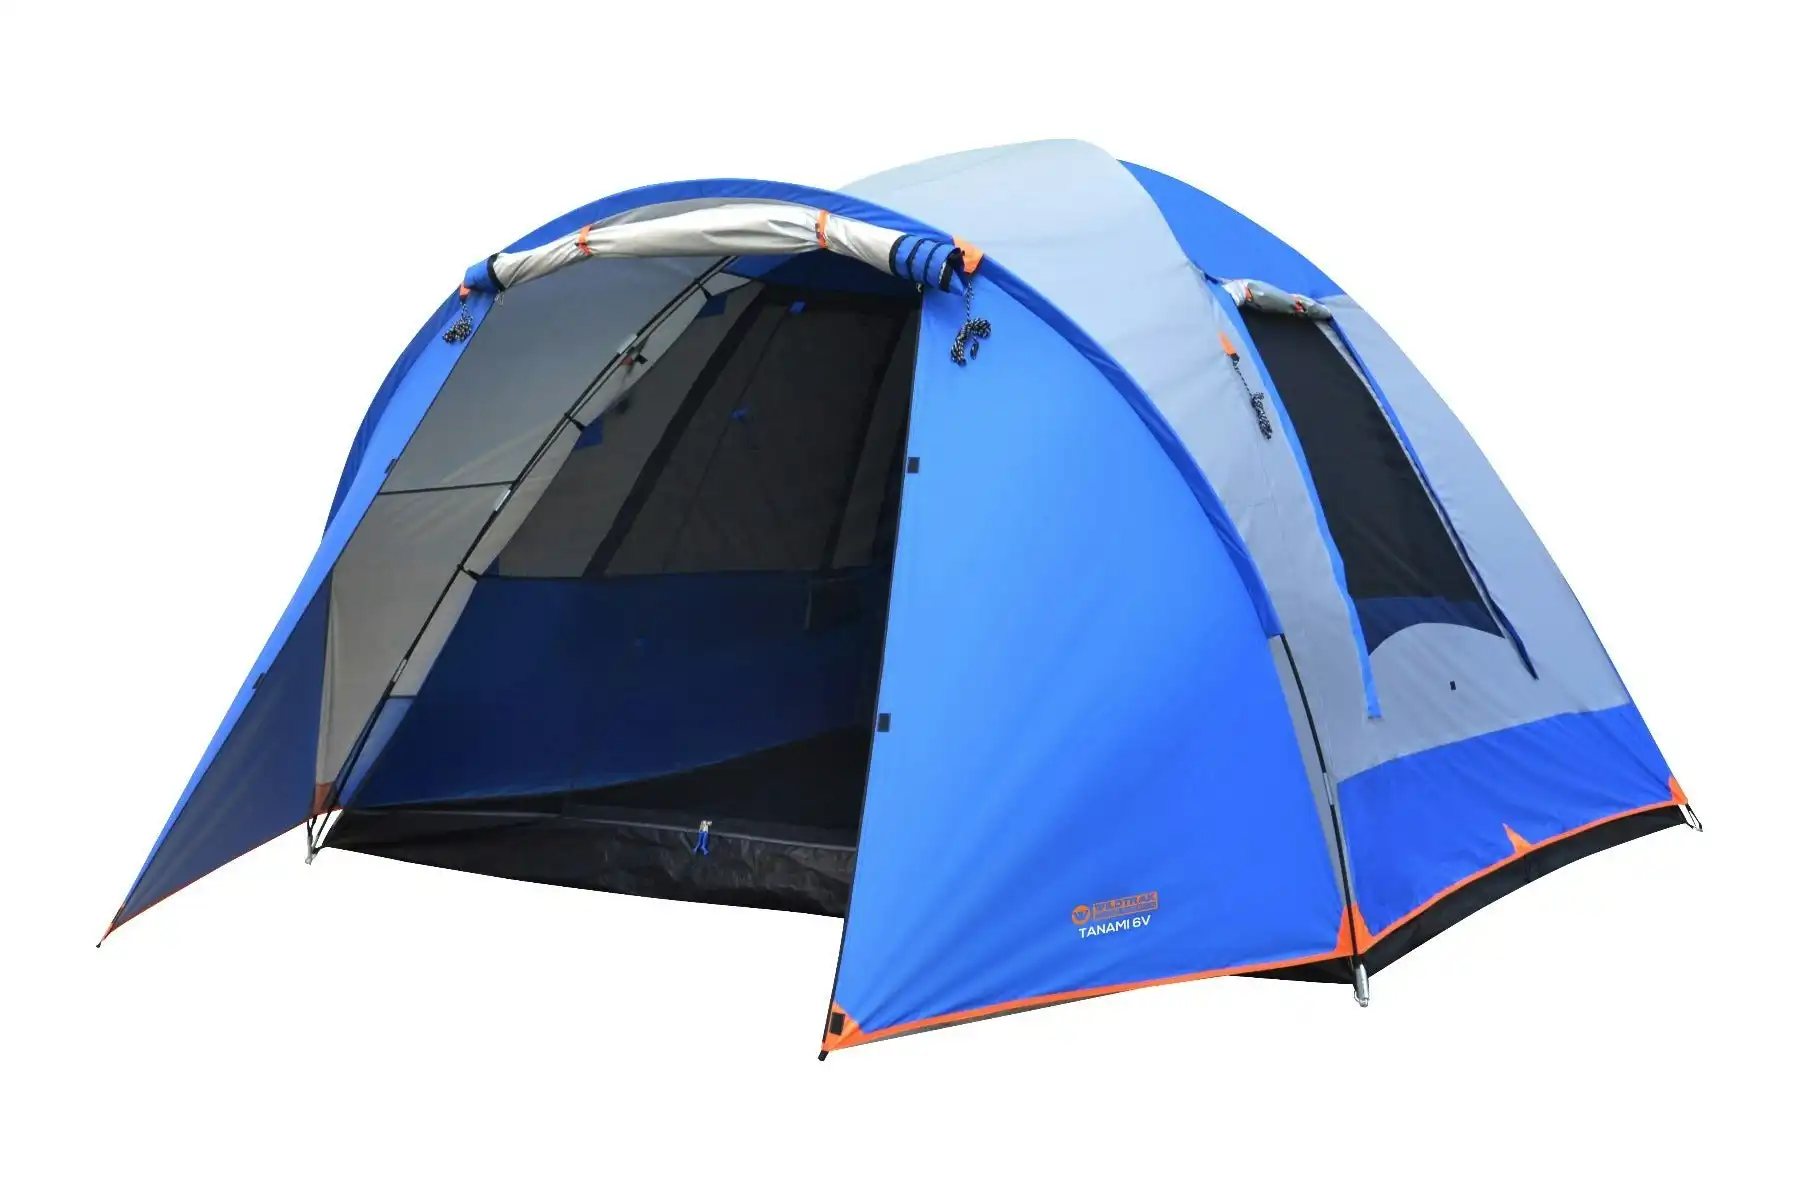 Tanami 6v Dome Tent